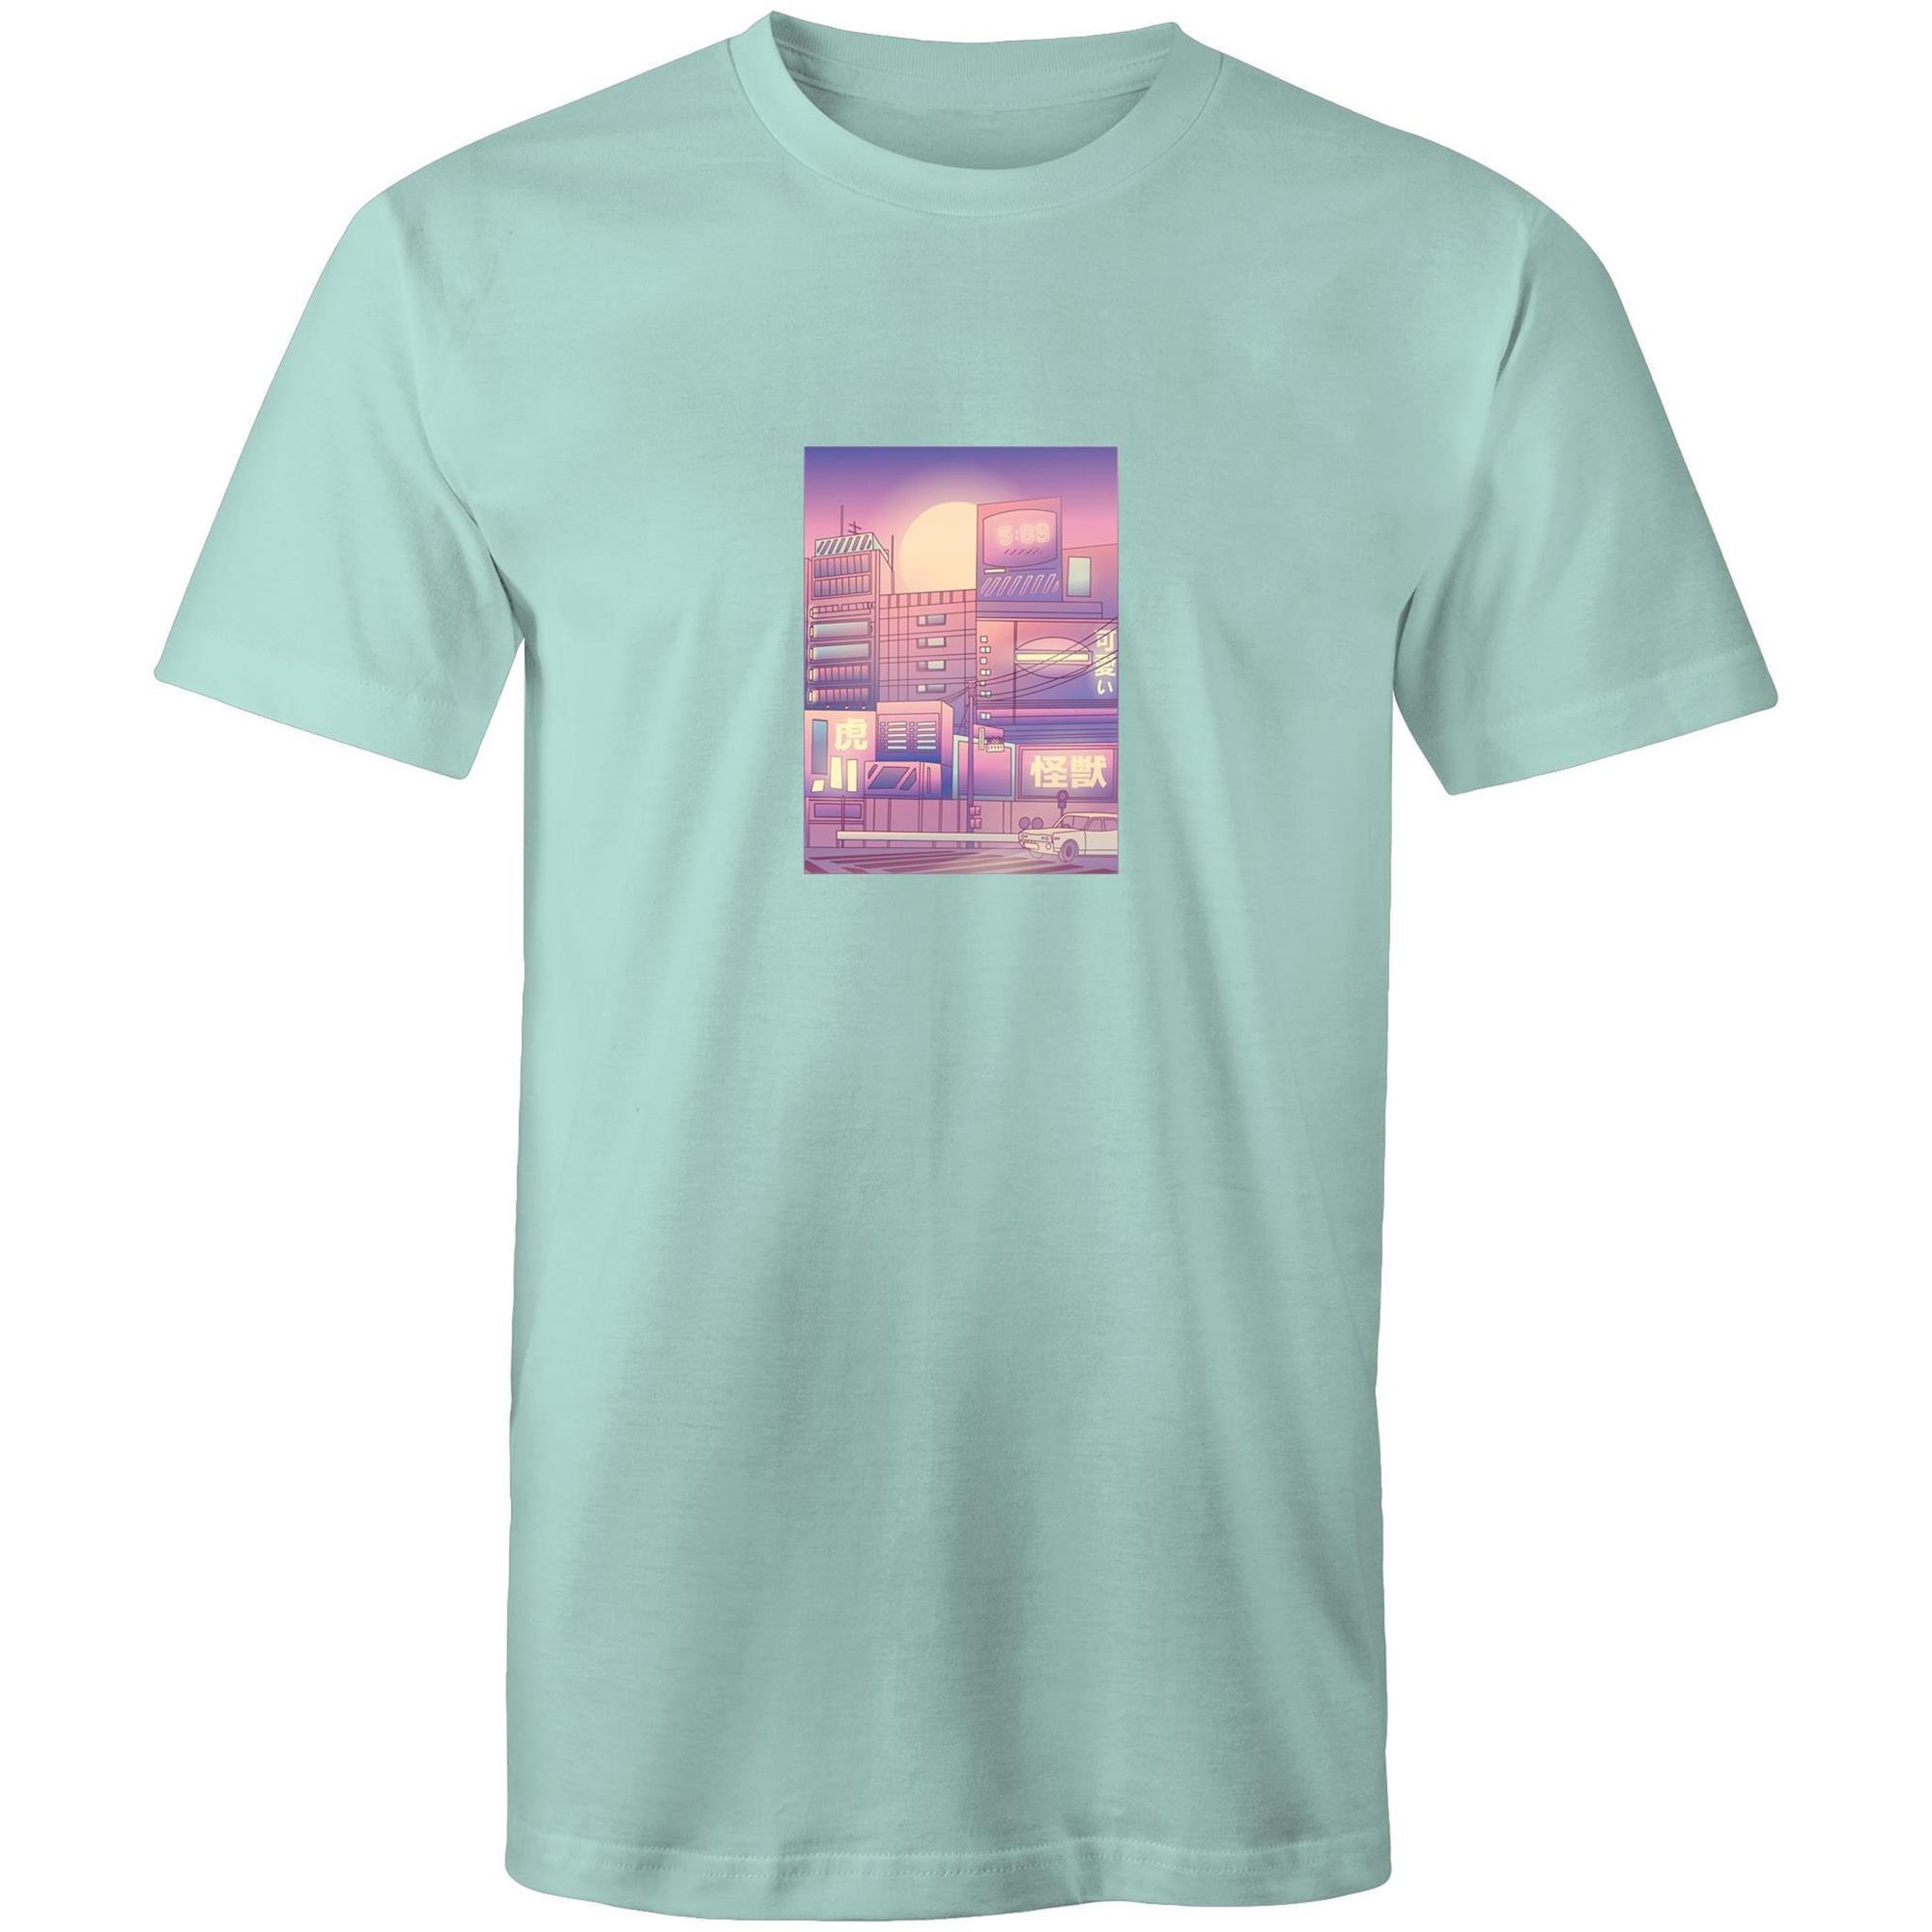 Men's Vaporwave City T-shirt